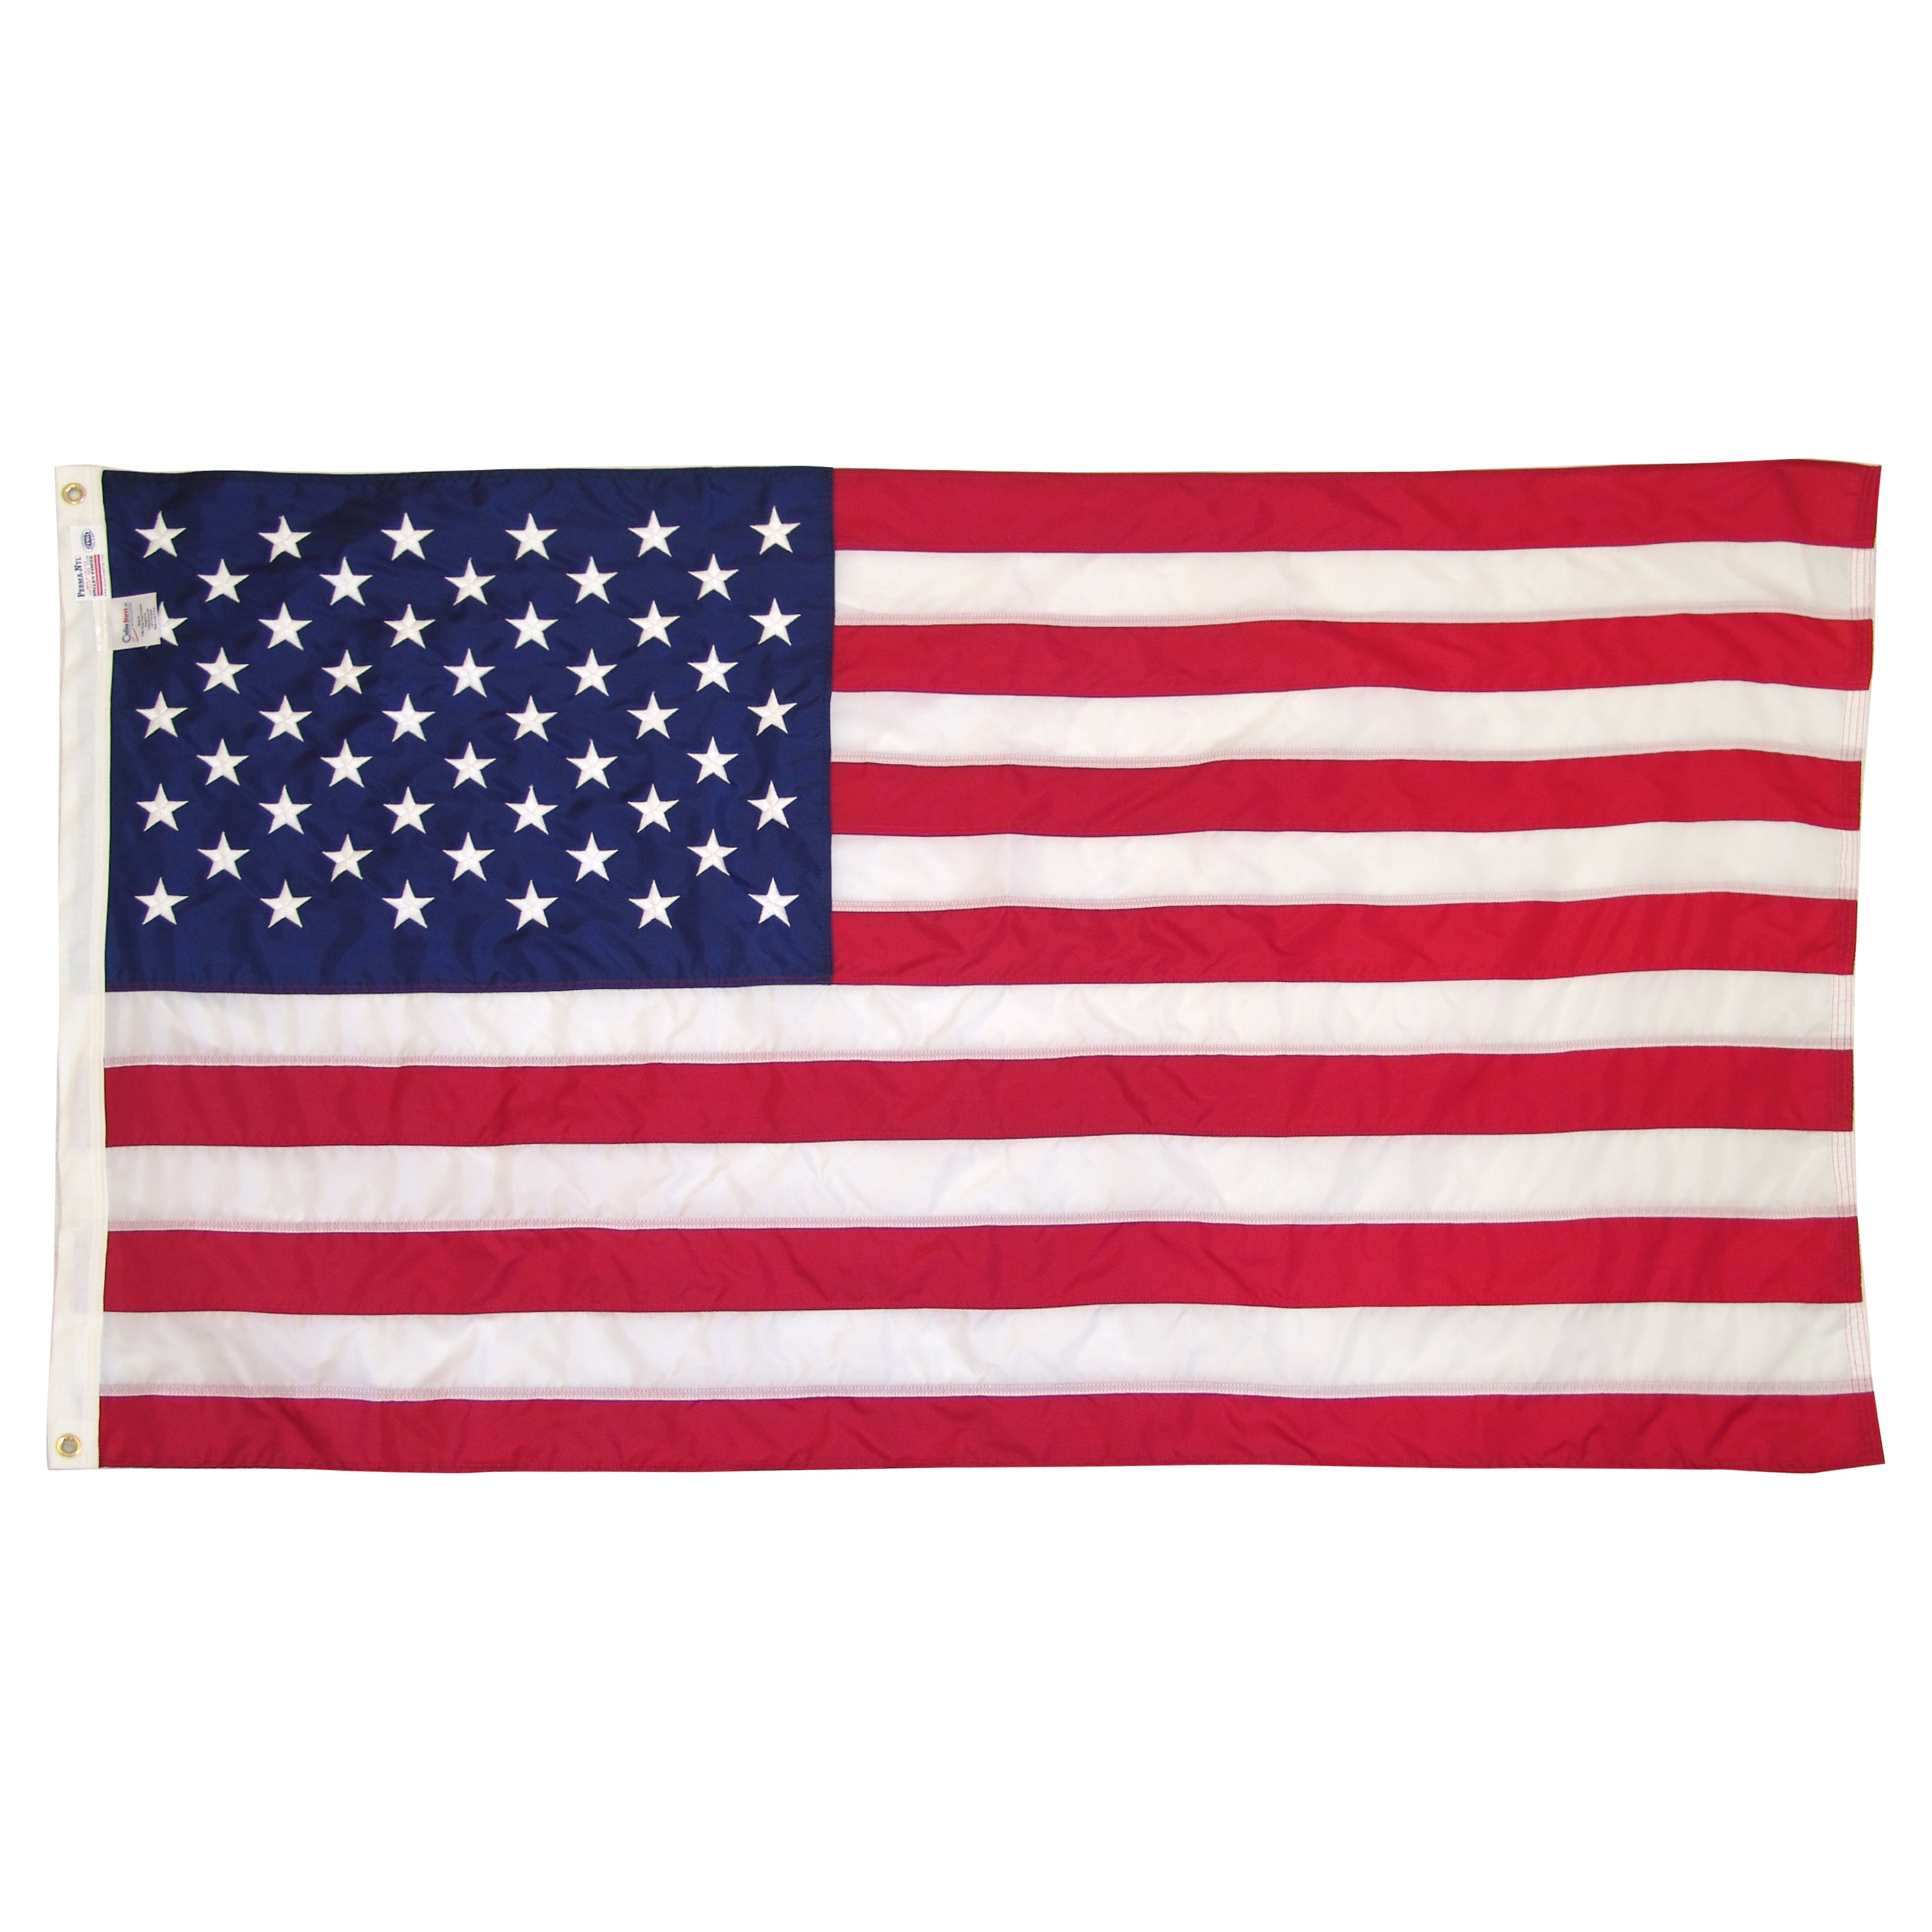 American Flag 3' x 5' Sewn Nylon - Valley Forge Flag